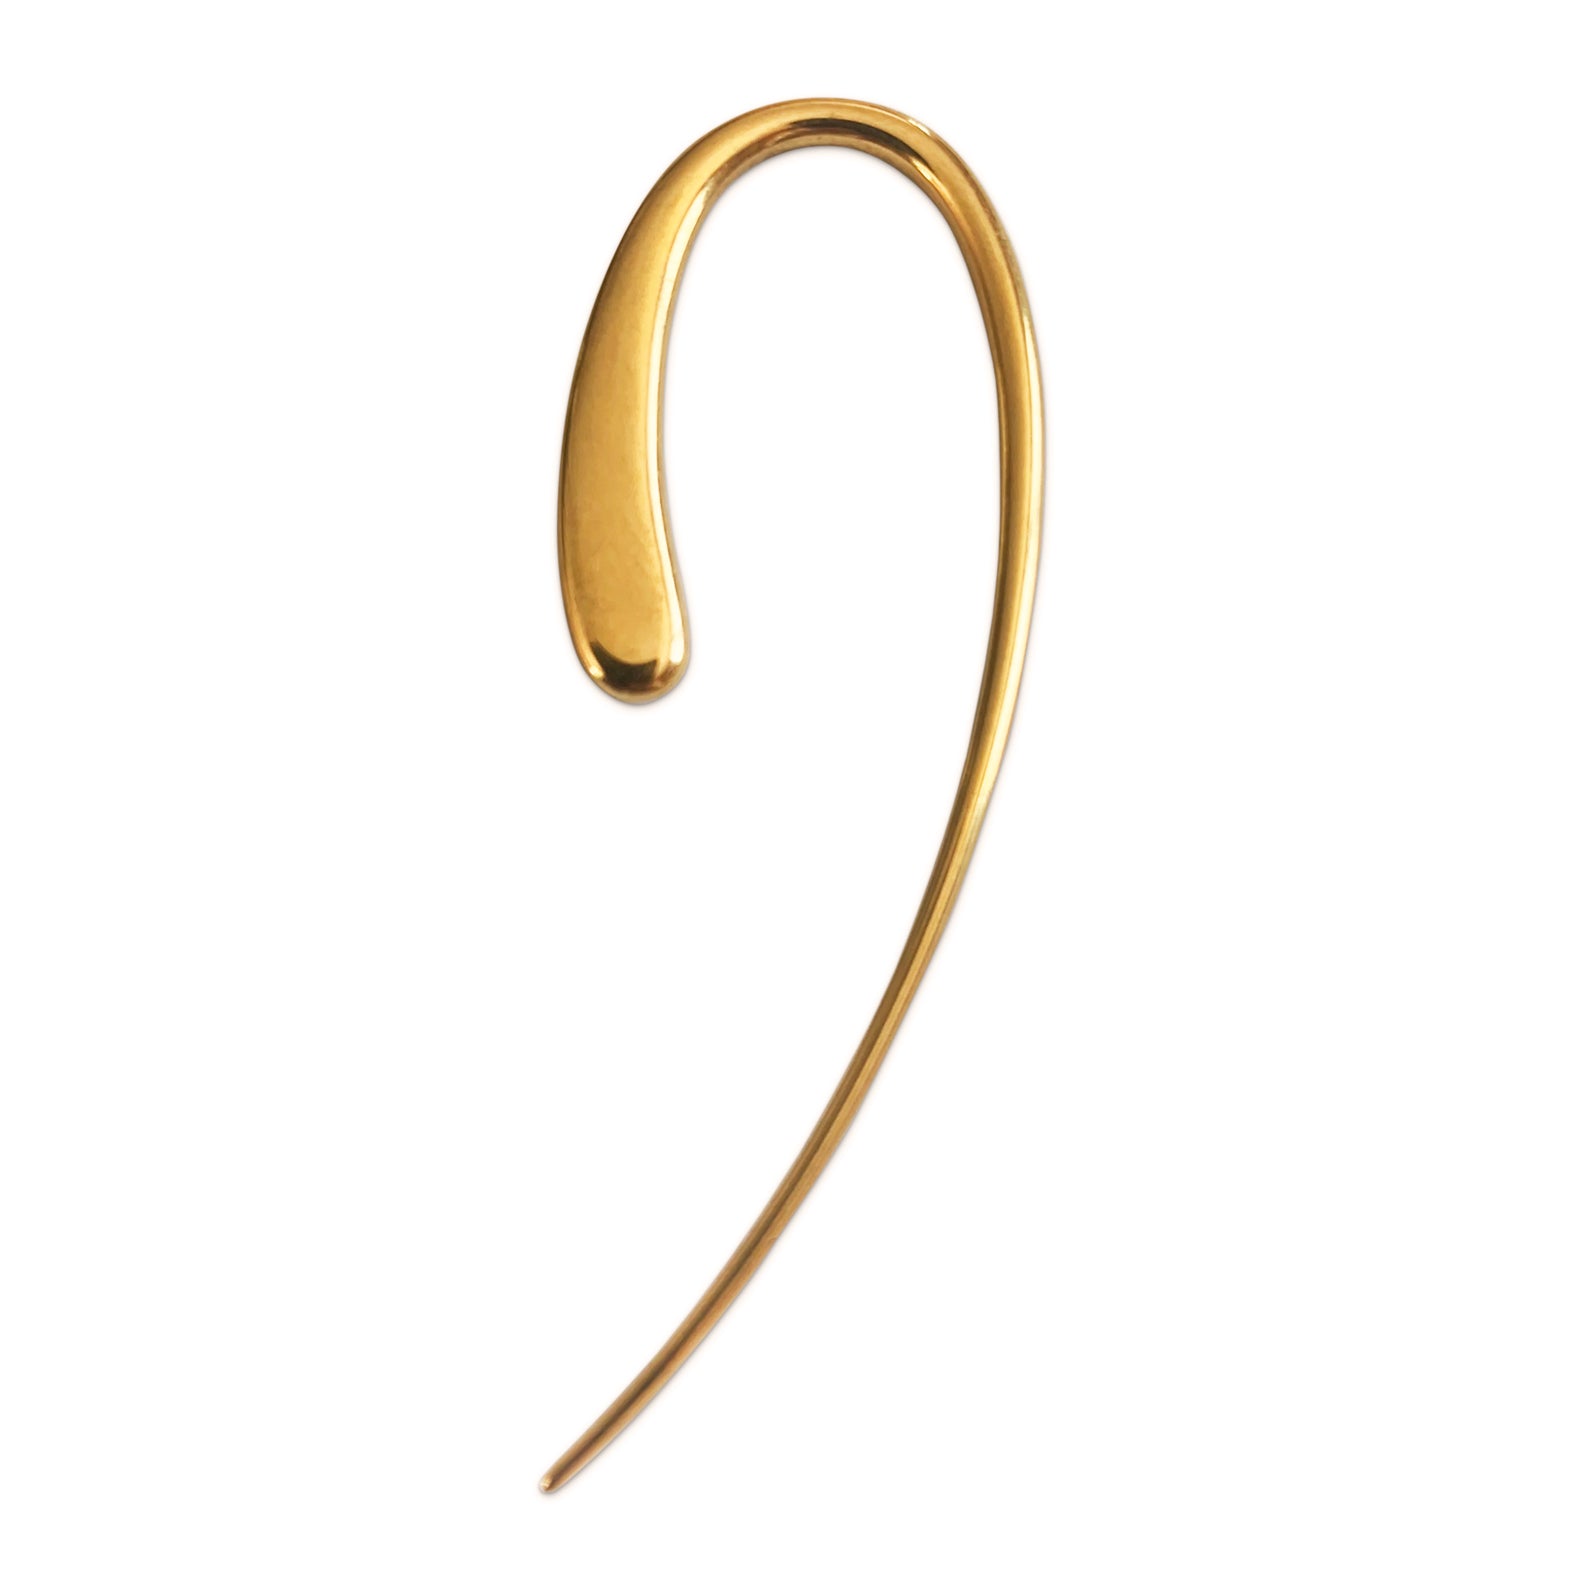 Hook Earrings Gold - Fishhook Earring Classic Unique Design